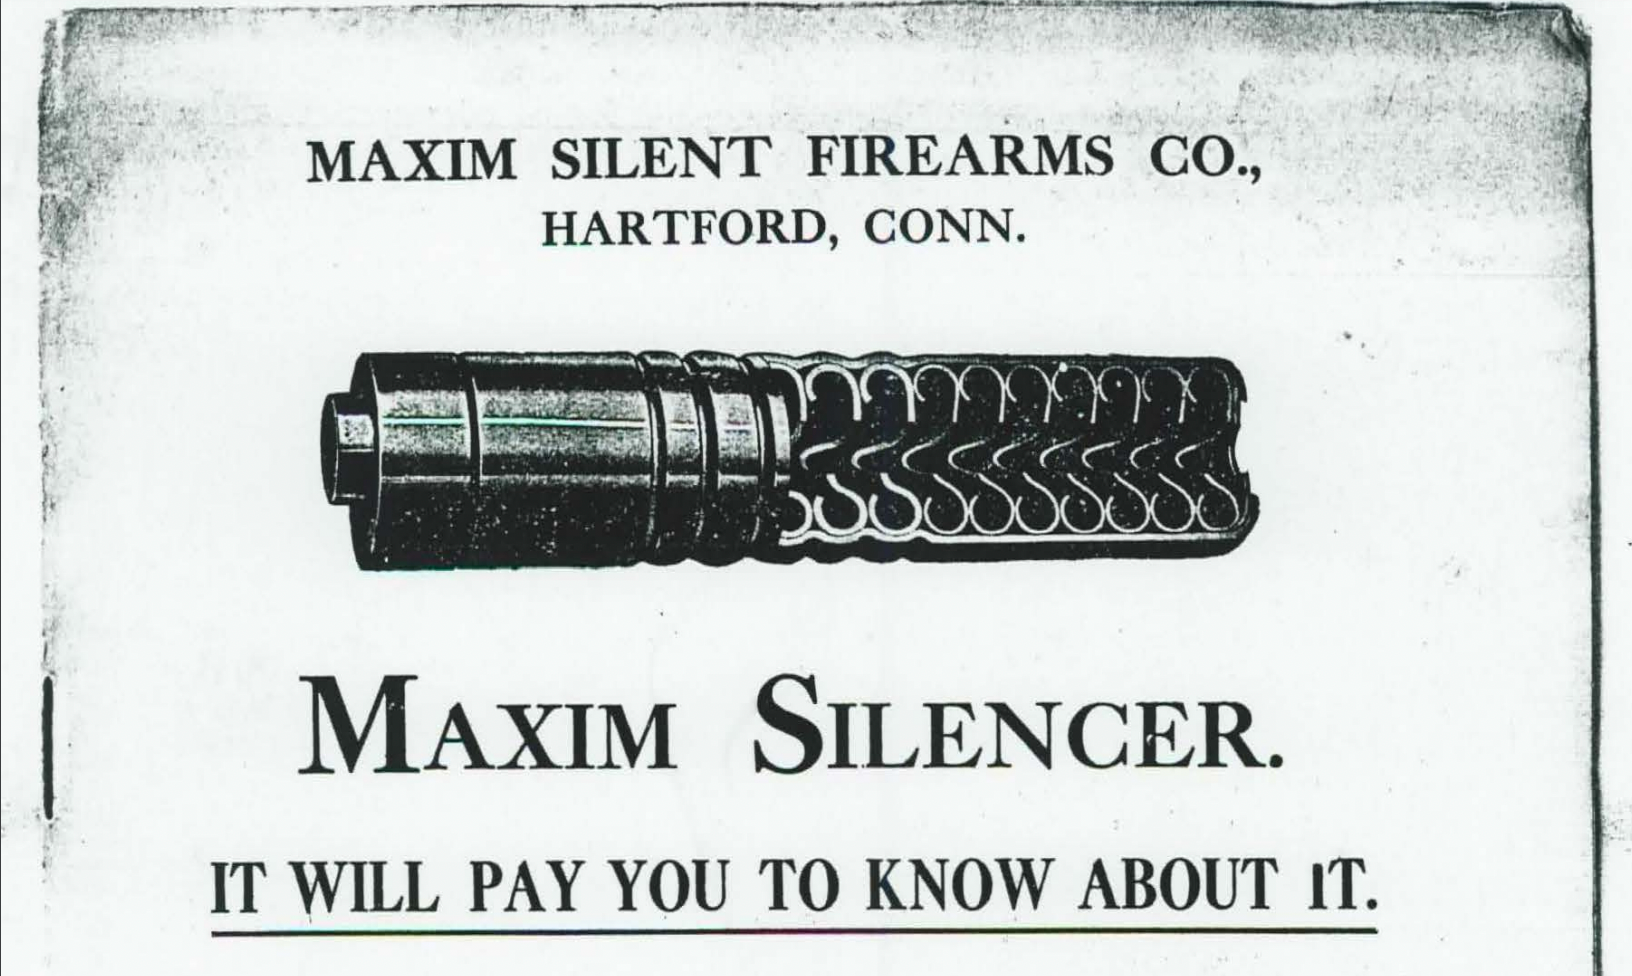 Maxim silencer brochure image. 